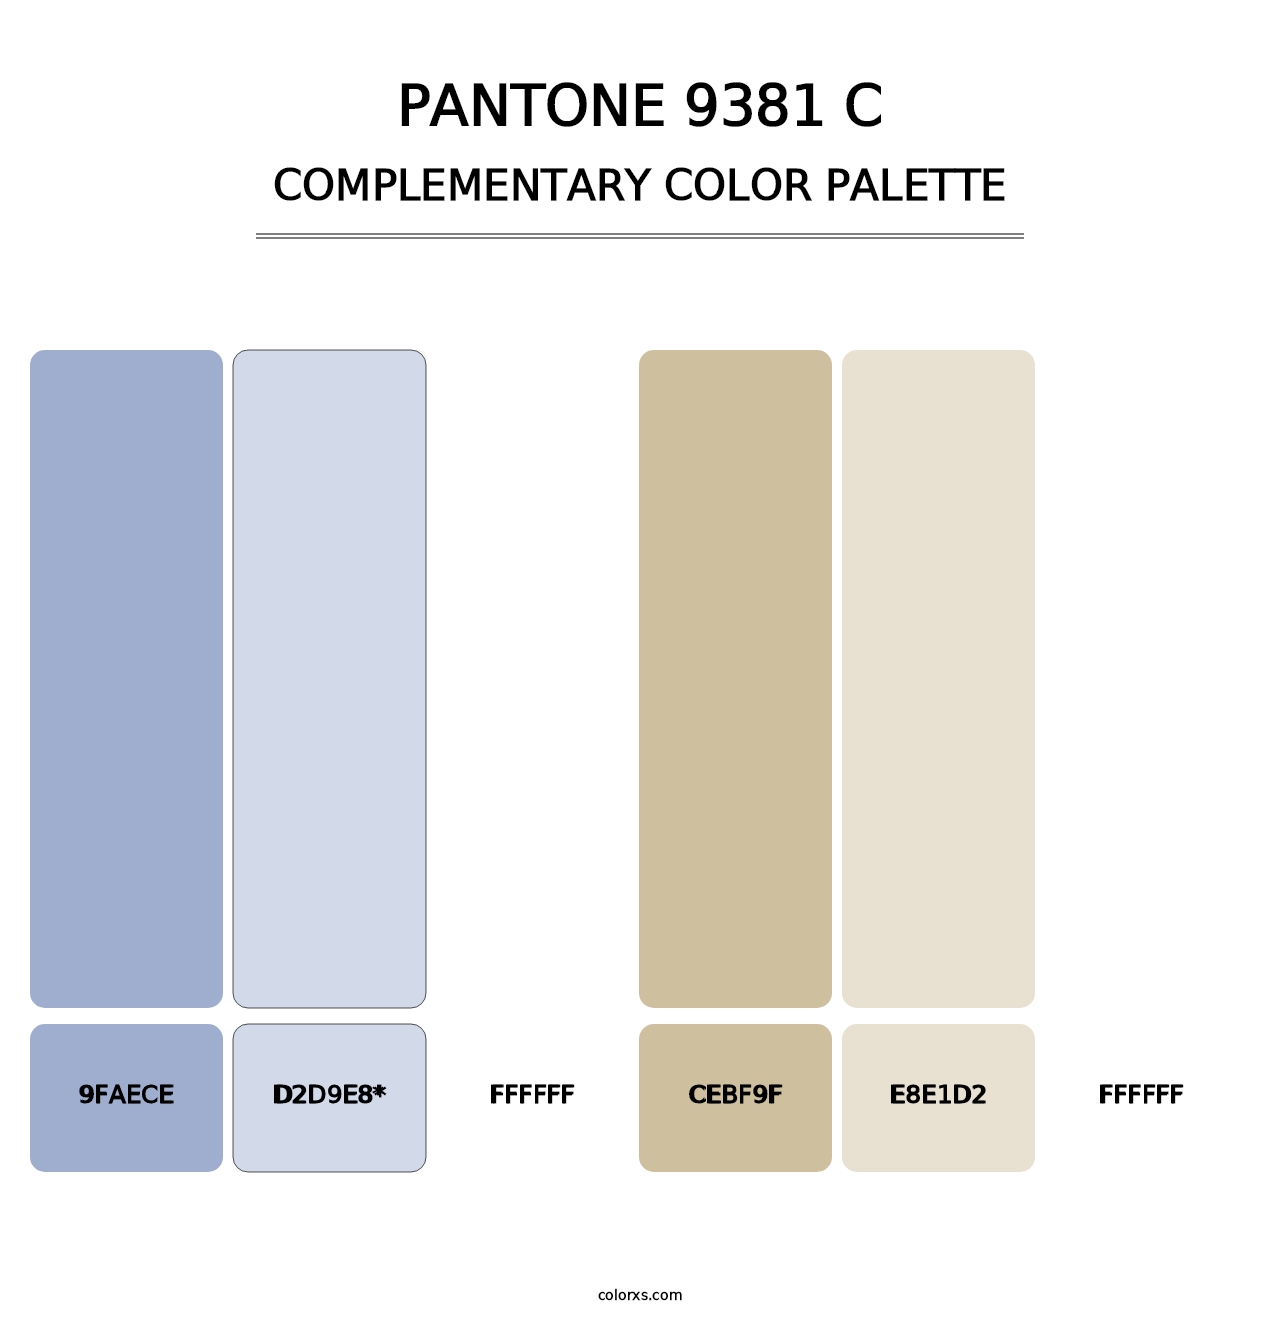 PANTONE 9381 C - Complementary Color Palette